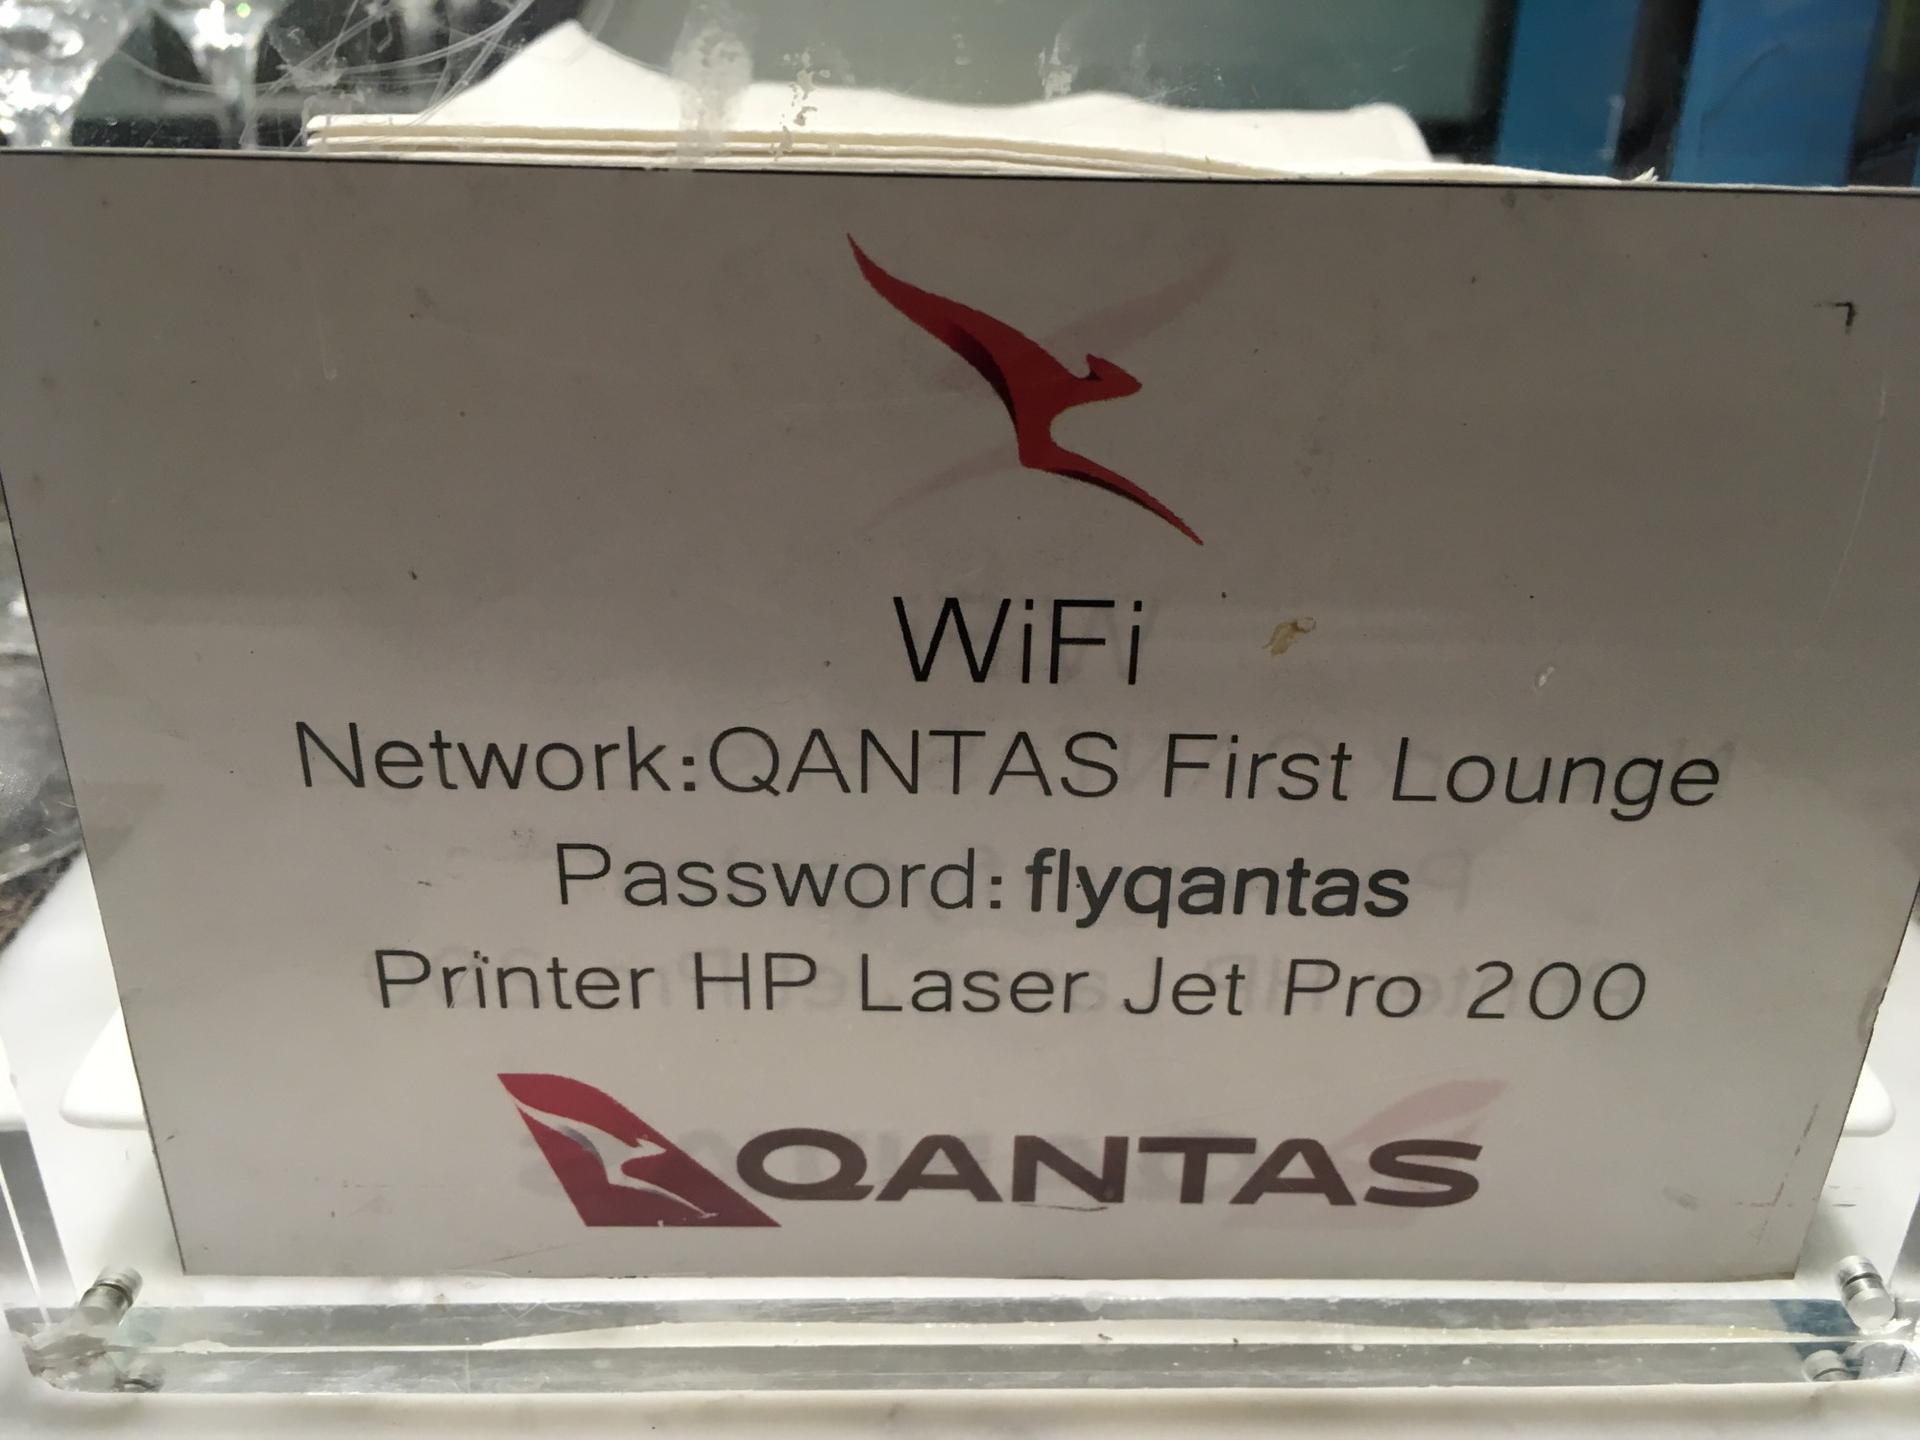 Qantas Airways International First Lounge image 76 of 77